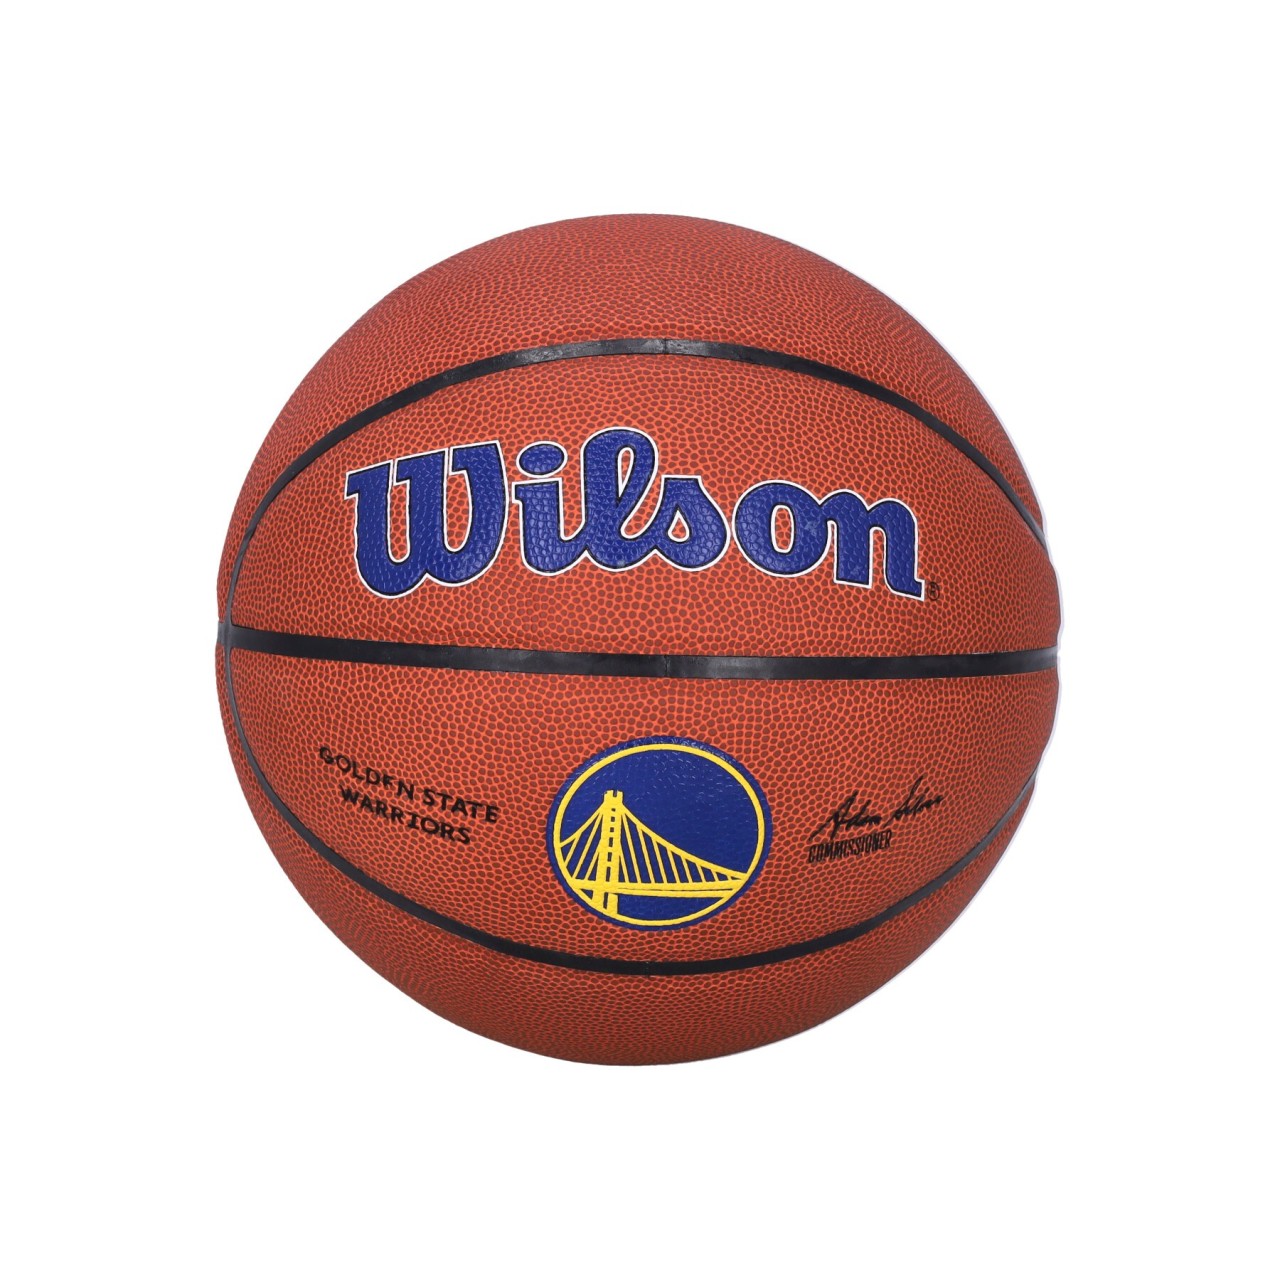 WILSON TEAM NBA TEAM ALLIANCE BASKETBALL SIZE 7 GOLWAR WTB3100XBGOL